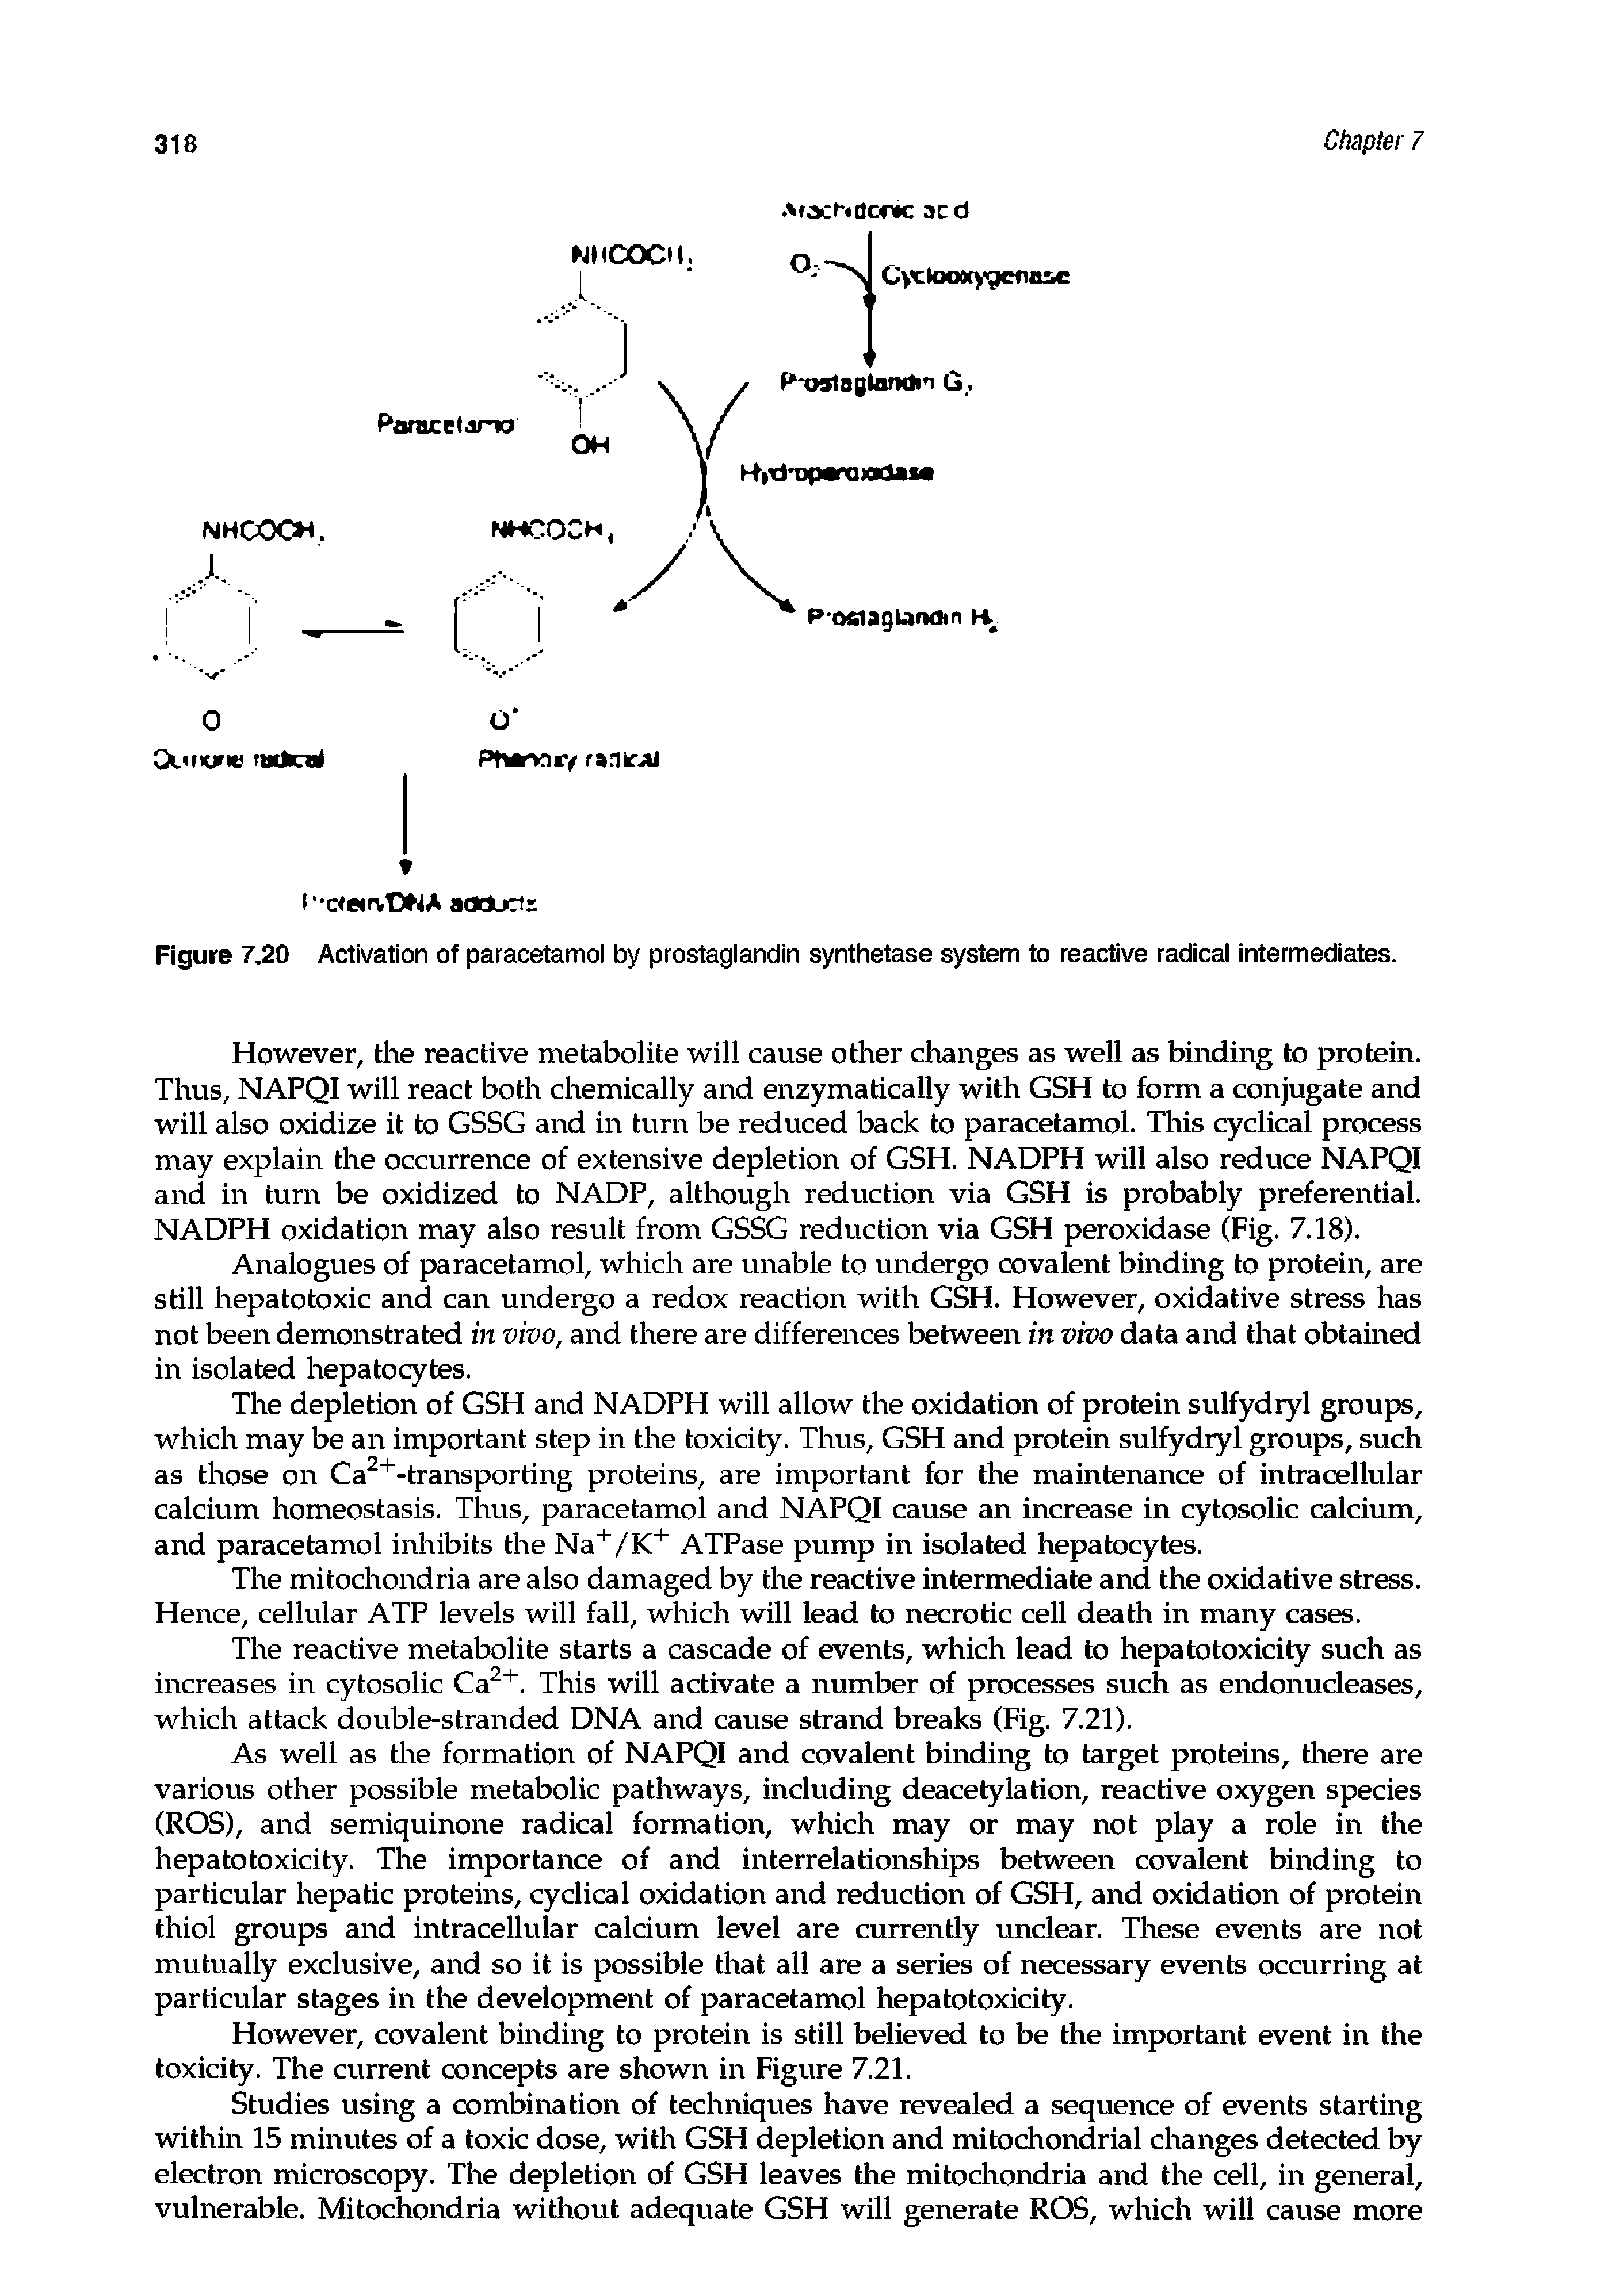 Figure 7.20 Activation of paracetamol by prostaglandin synthetase system to reactive radical intermediates.